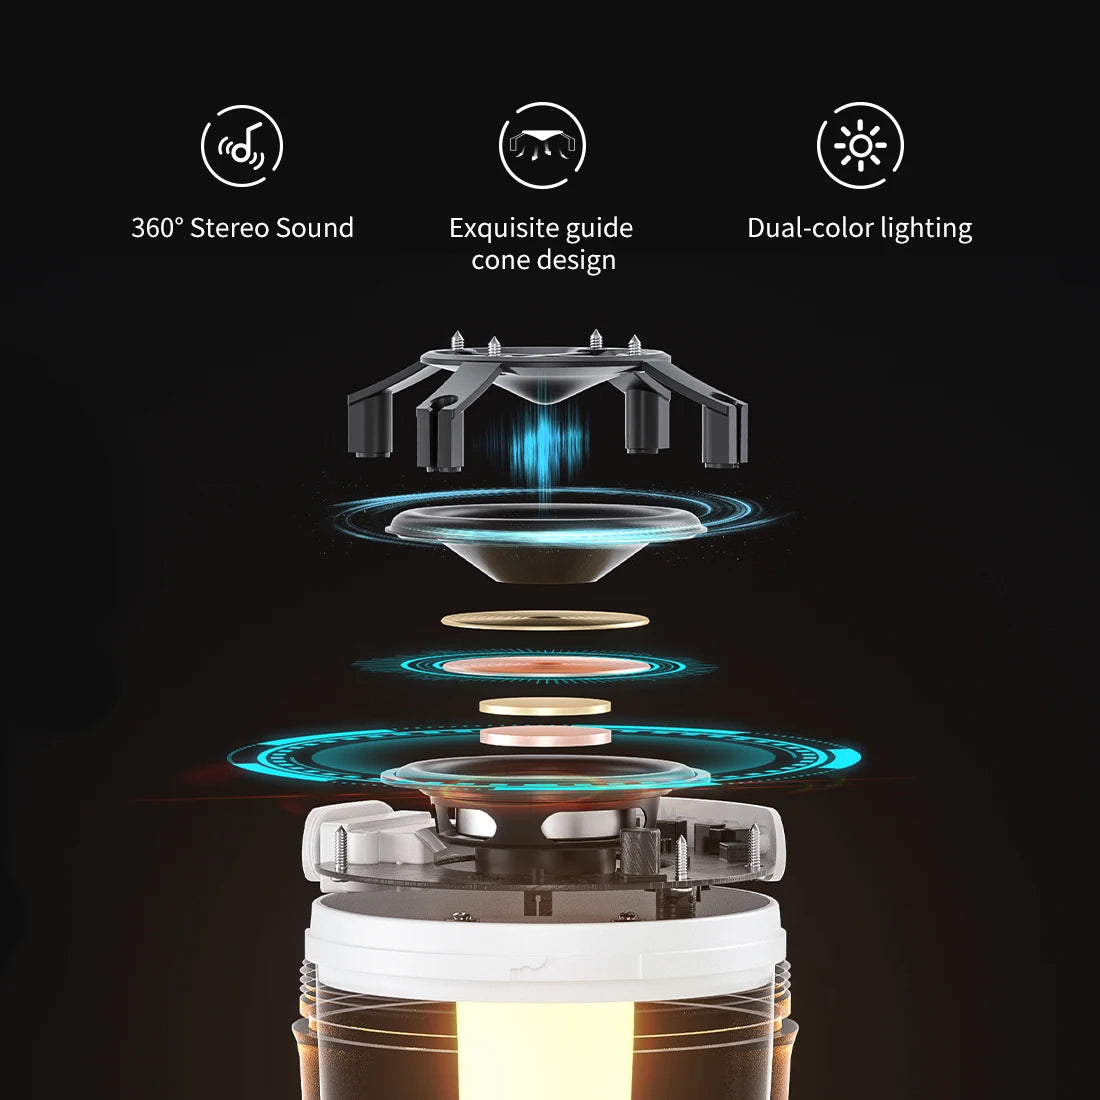 Waterproof Bluetooth Camping Lantern with Speaker